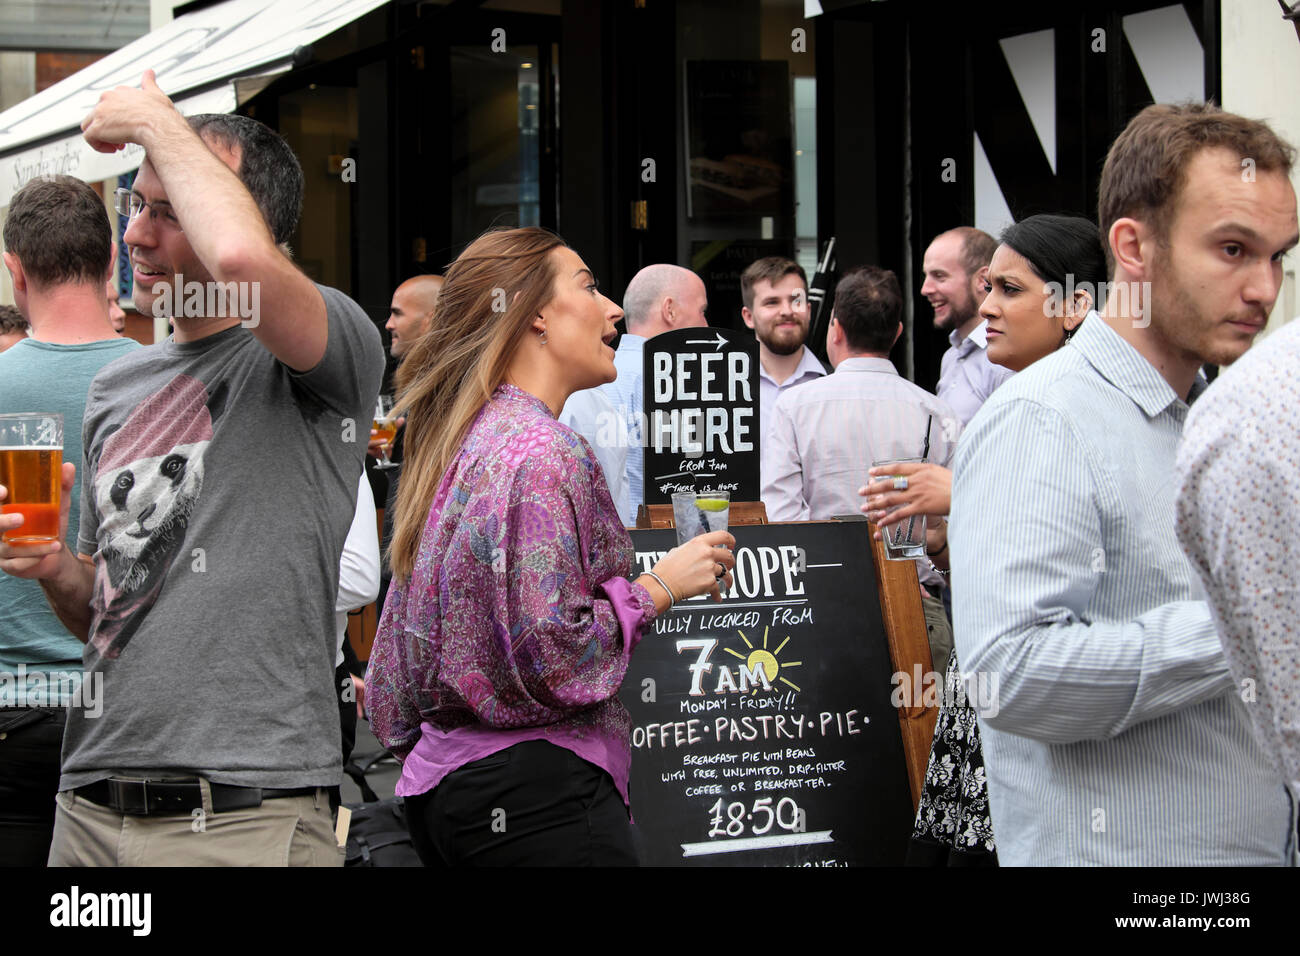 People drinking beer after work outside The Hope pub in Cowcross Street, Smithfield, Clerkenwell in London EC1 UK England   KATHY DEWITT Stock Photo